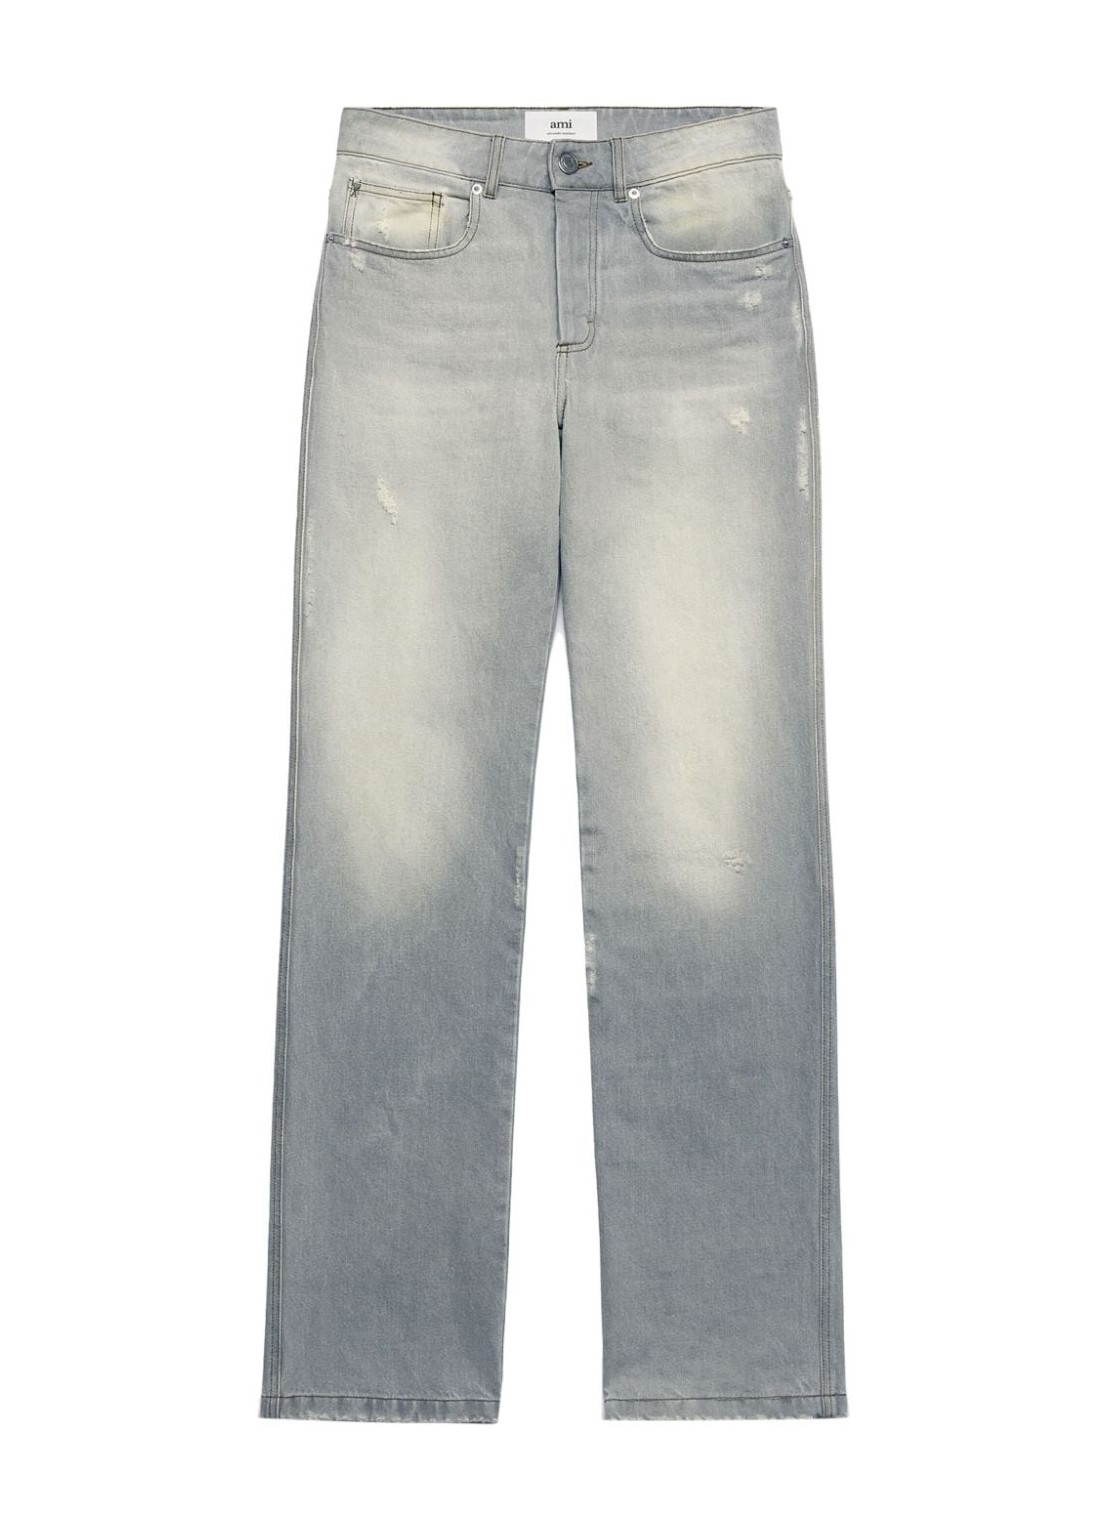 Pantalon jeans ami denim man straight fit jeans utr500de0019 0554 talla 33
 